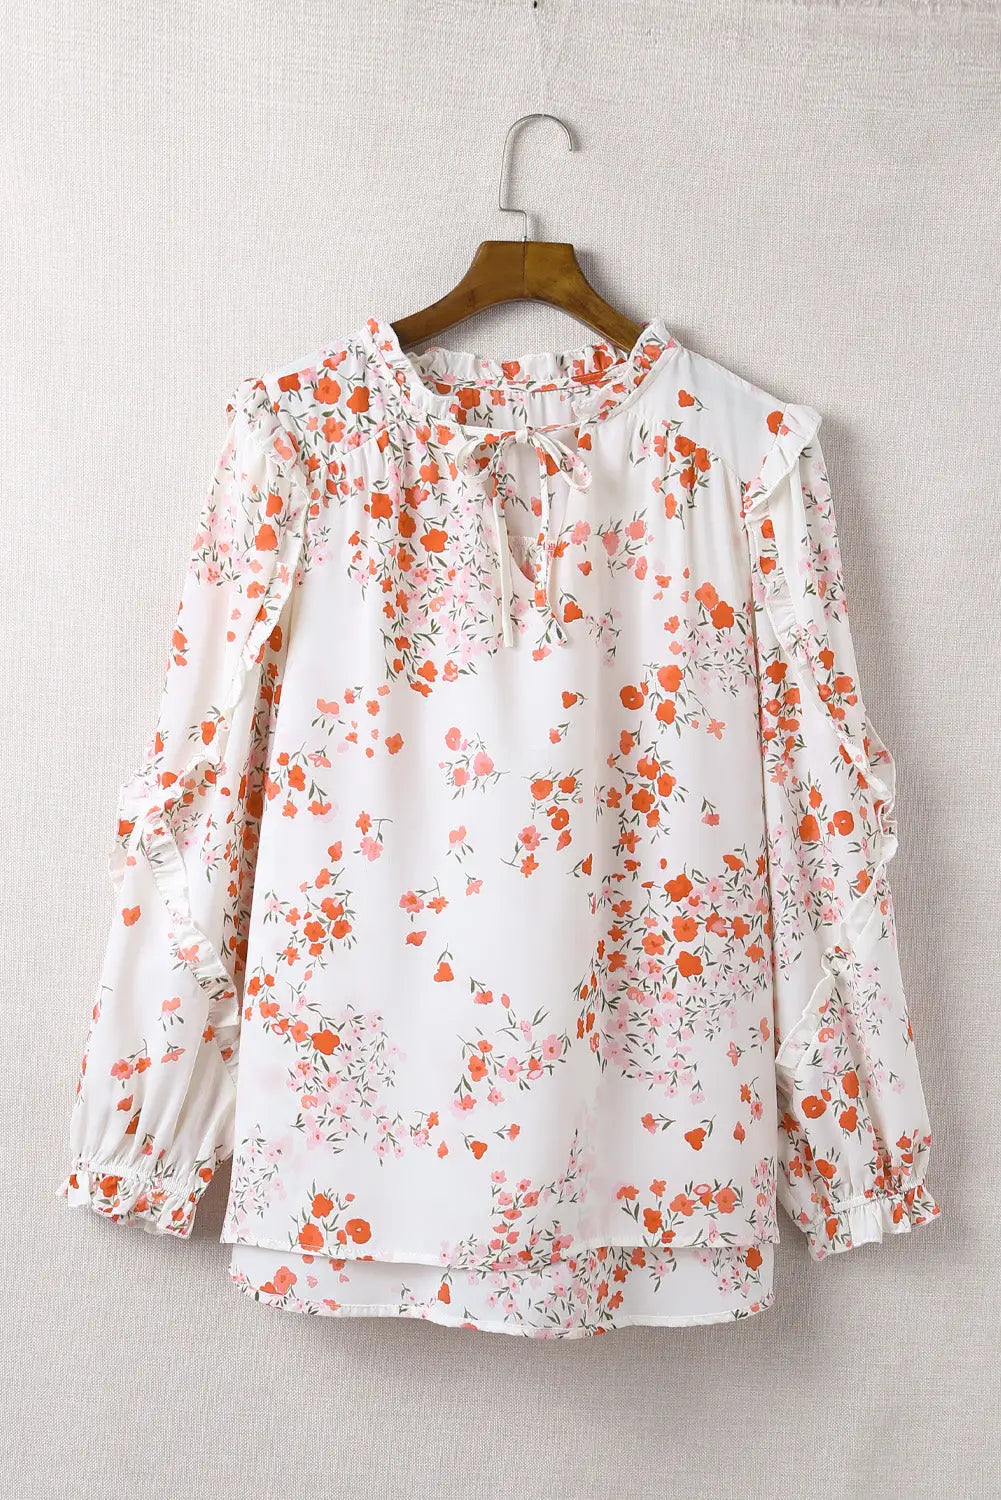 White split v neck floral plus size blouse with ruffles